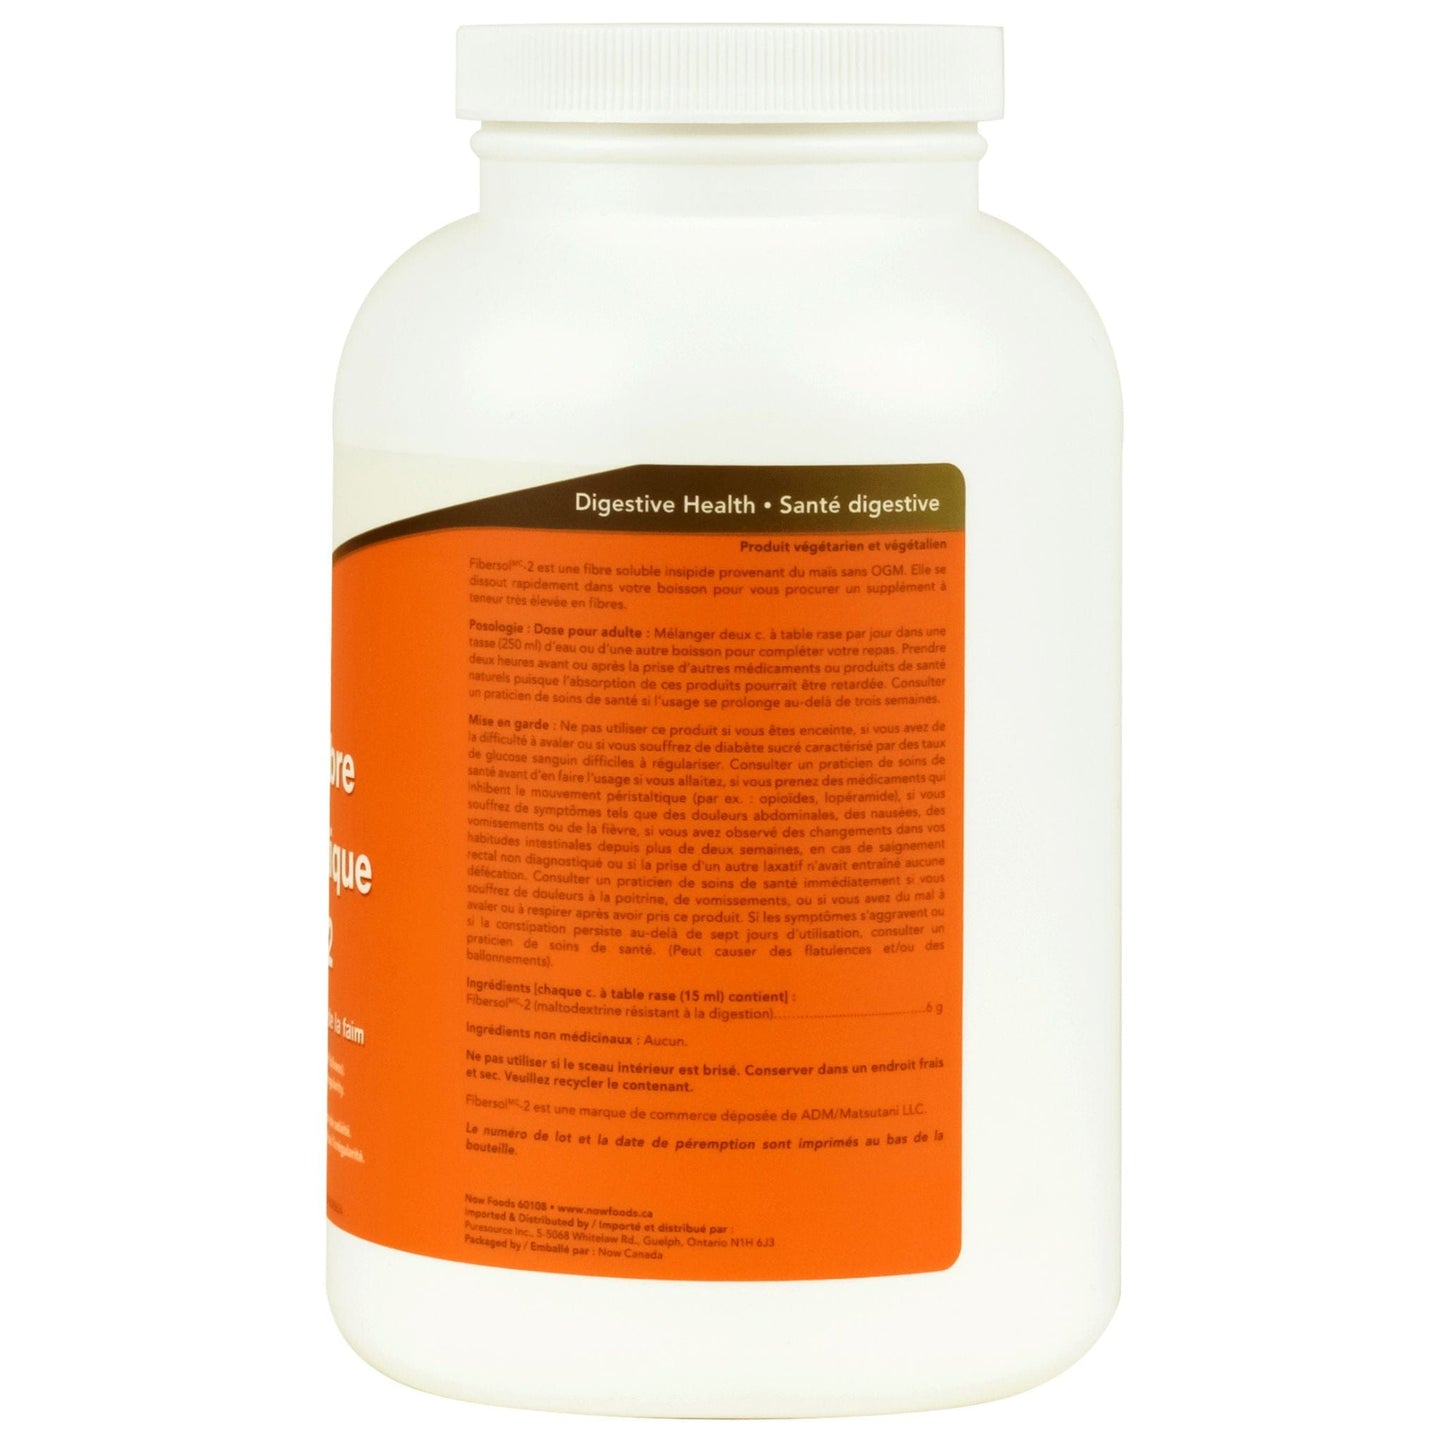 340g | Now Prebiotic Fibre Hunger Management Powder